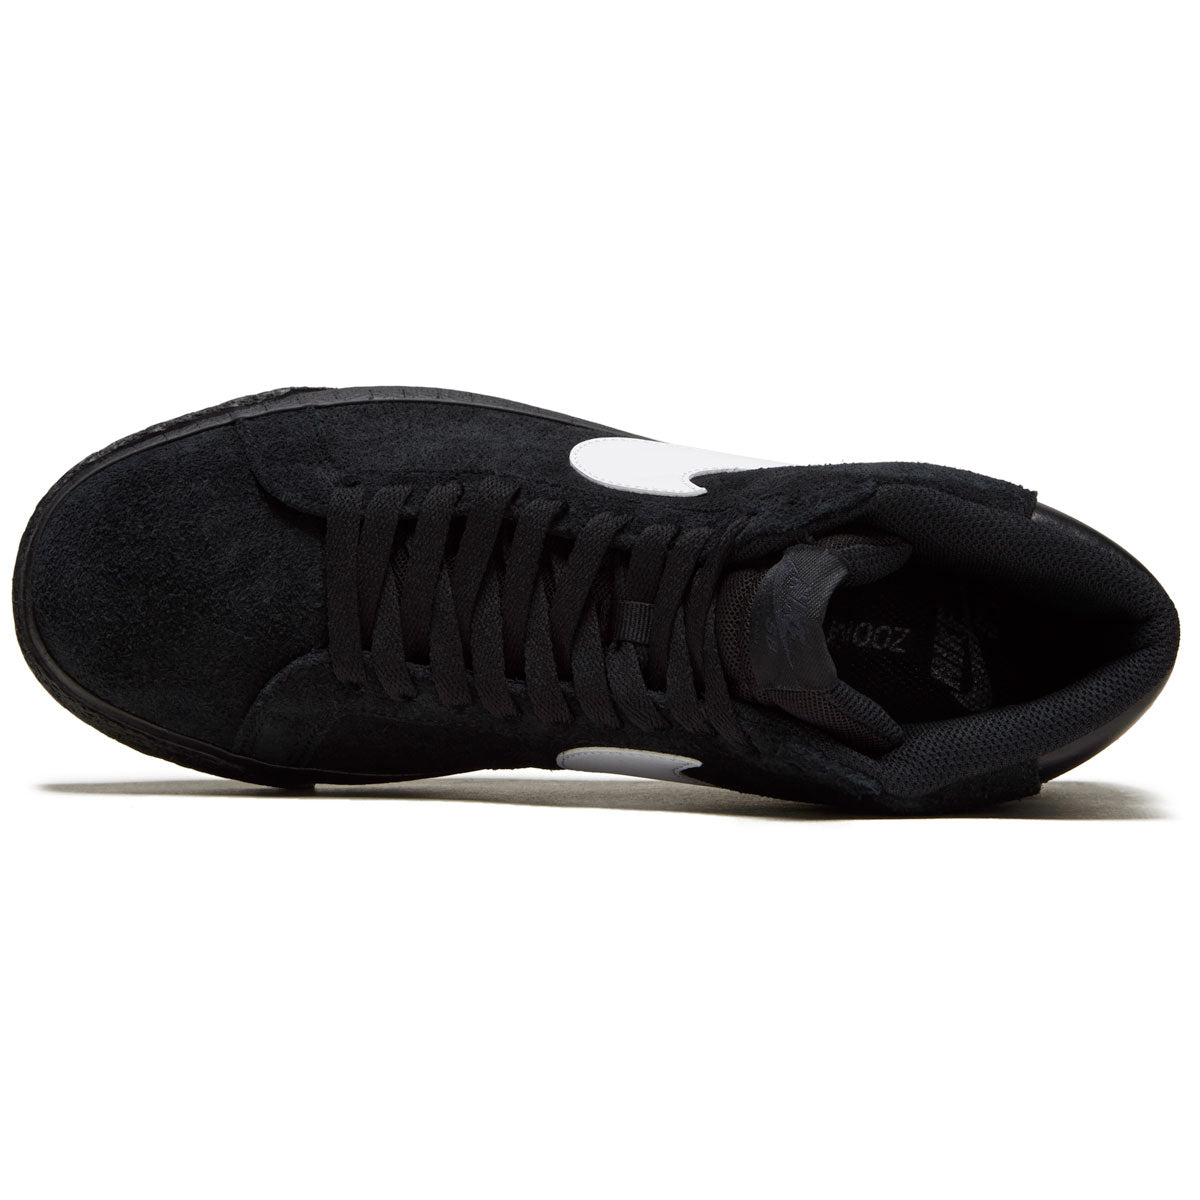 Nike SB Zoom Blazer Mid Shoes - Black/White/Black/Black image 3